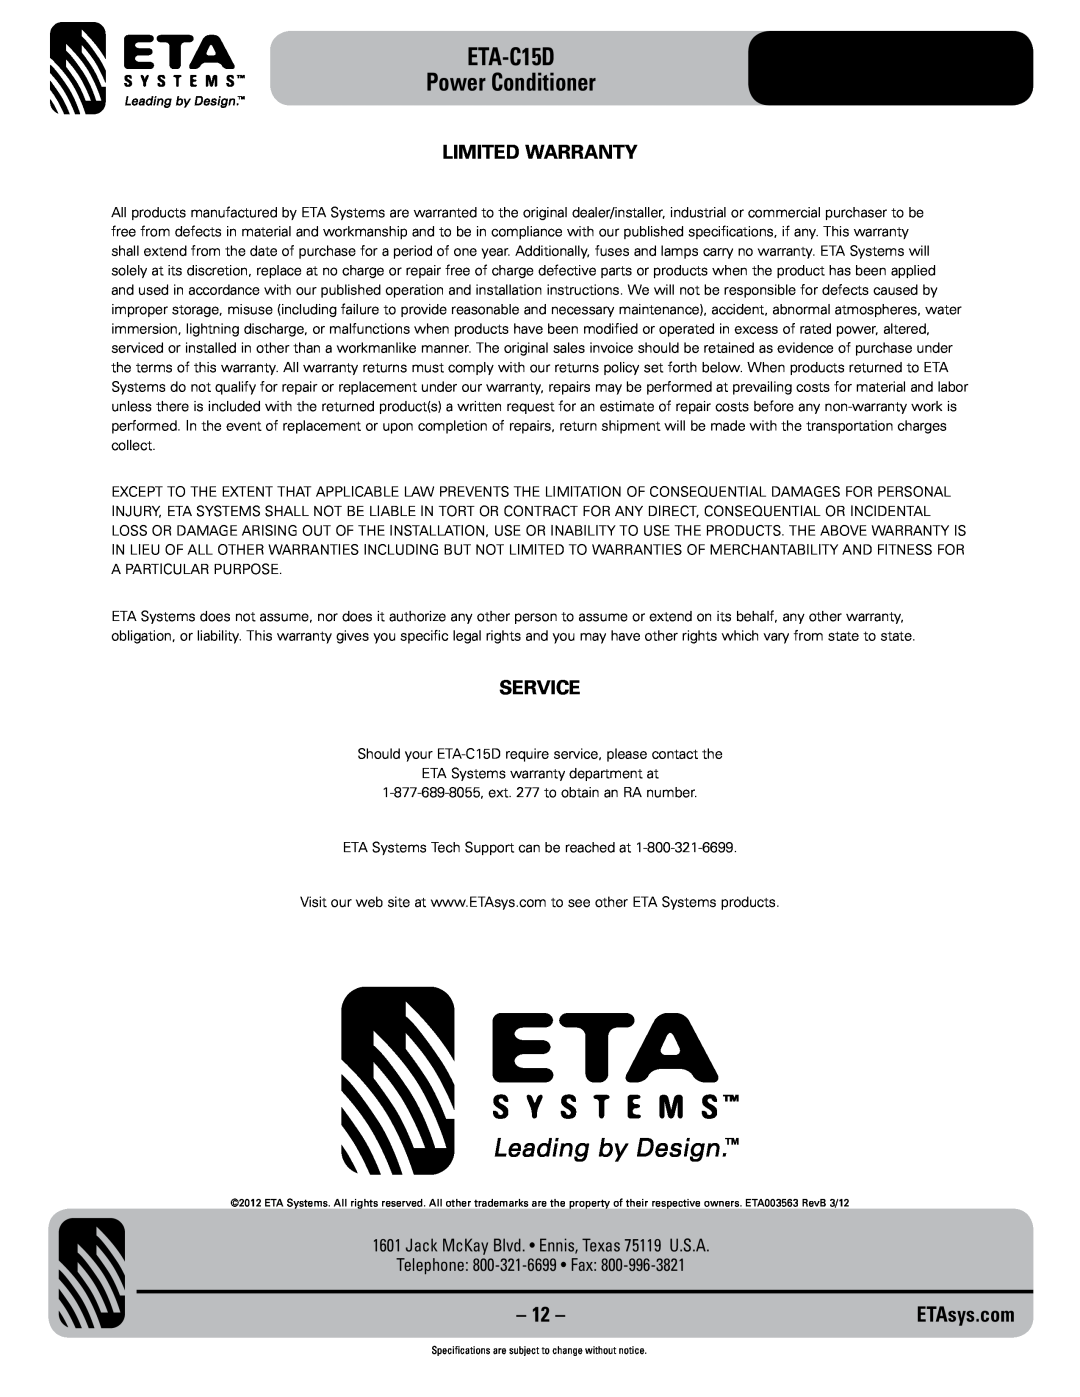 ETA Systems ETA C15D Limited Warranty, Service, ETA-C15D Power Conditioner, Jack McKay Blvd. Ennis, Texas 75119 U.S.A 